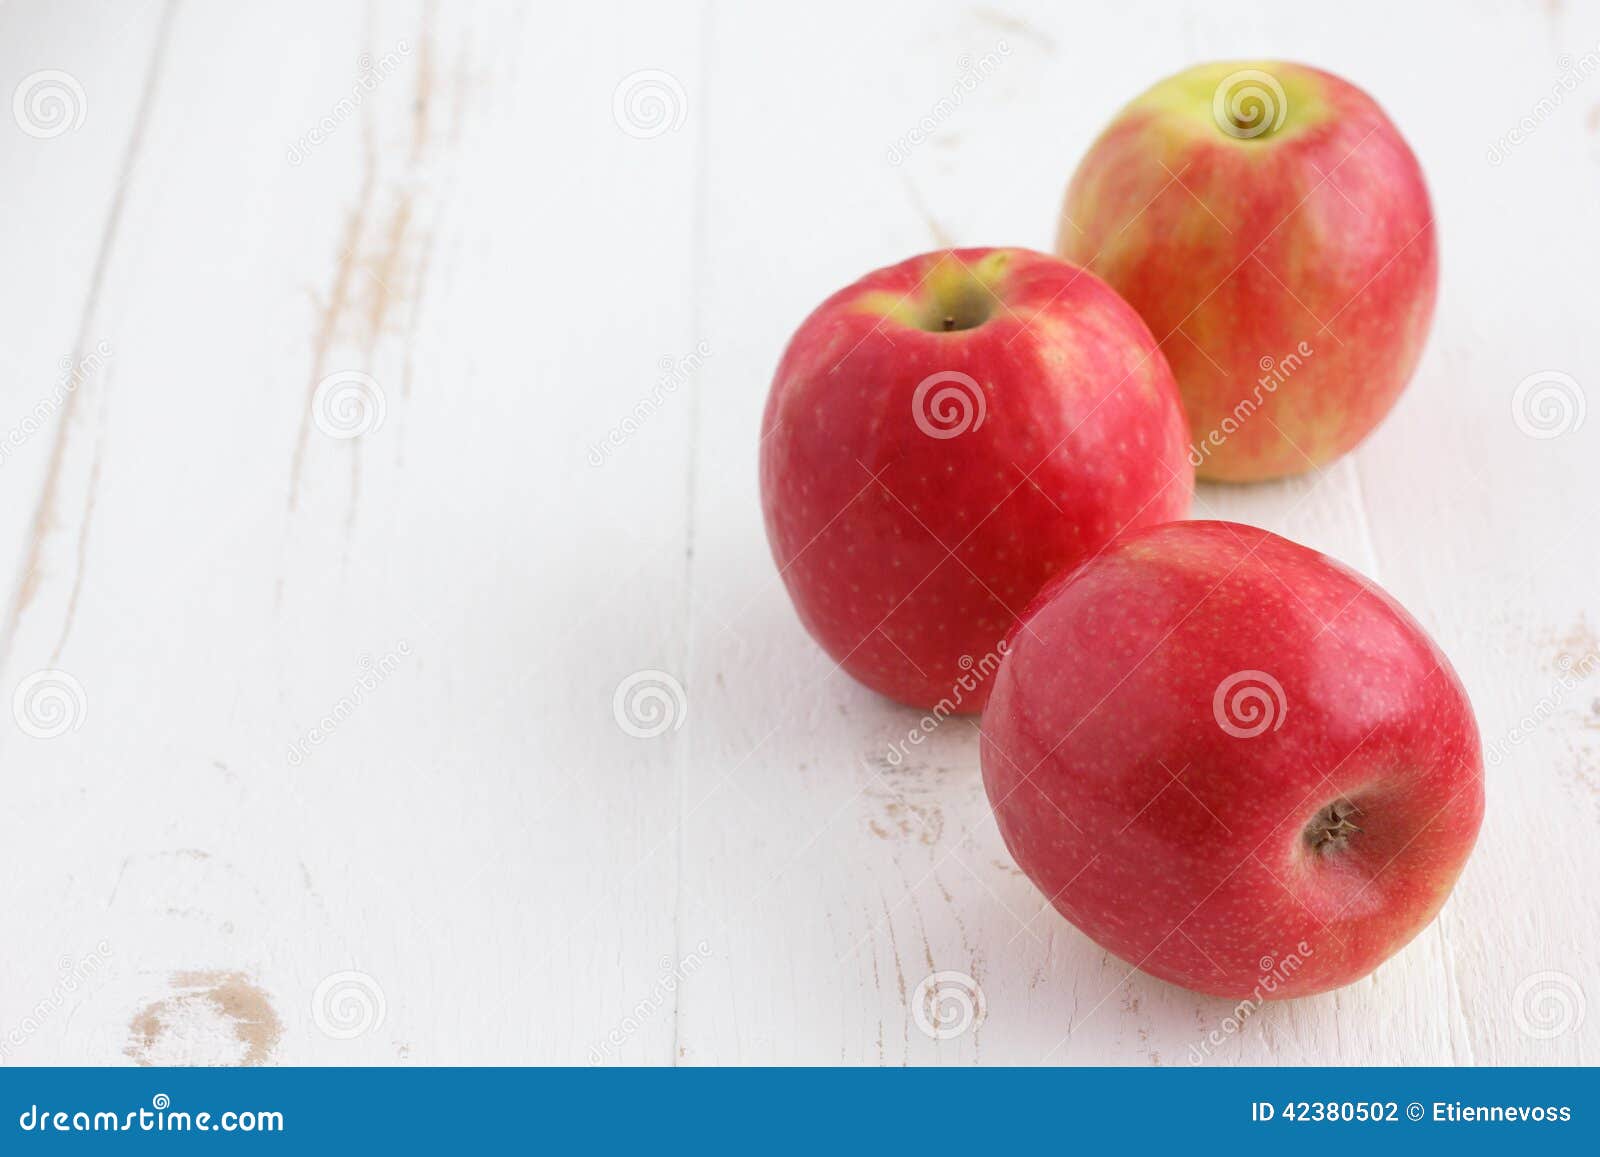 https://thumbs.dreamstime.com/z/pink-lady-apples-painted-white-rustic-wood-table-42380502.jpg